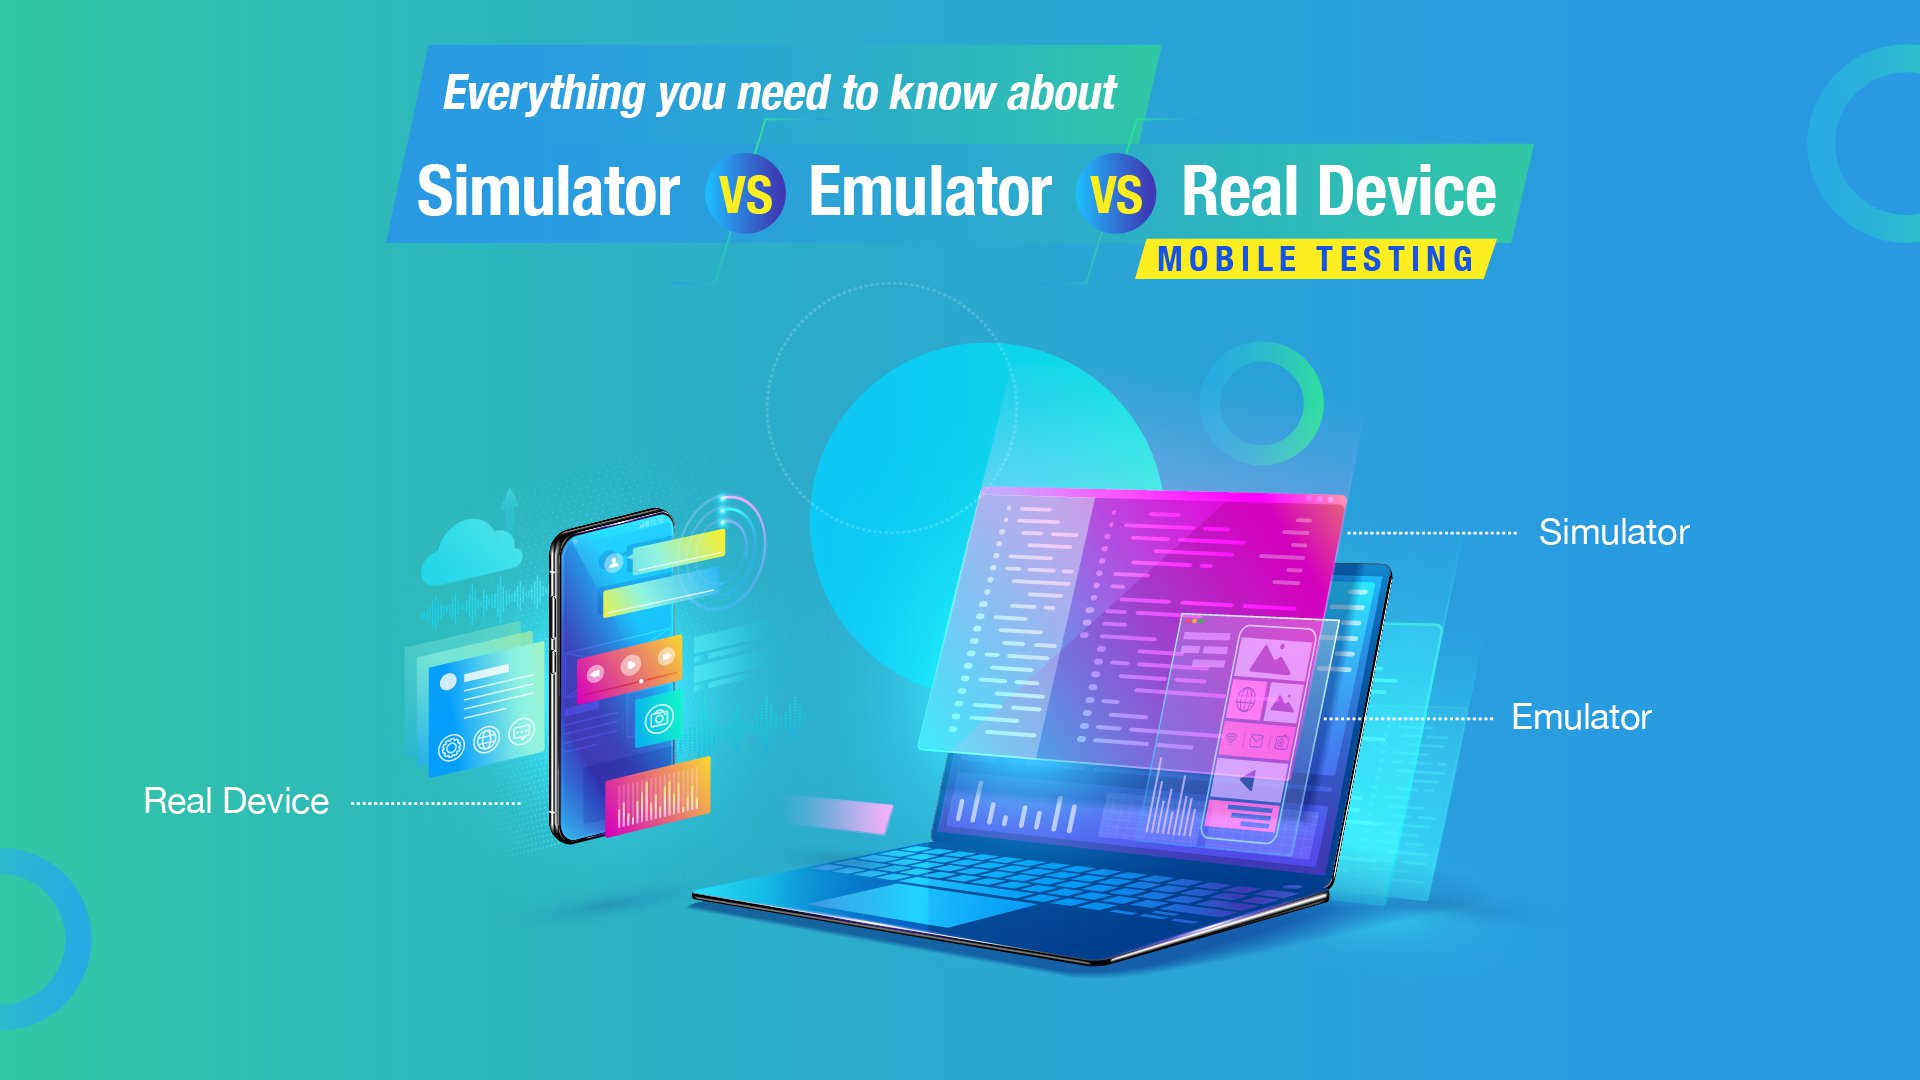 Simulator vs Emulator vs Real Devices for Mobile Testing